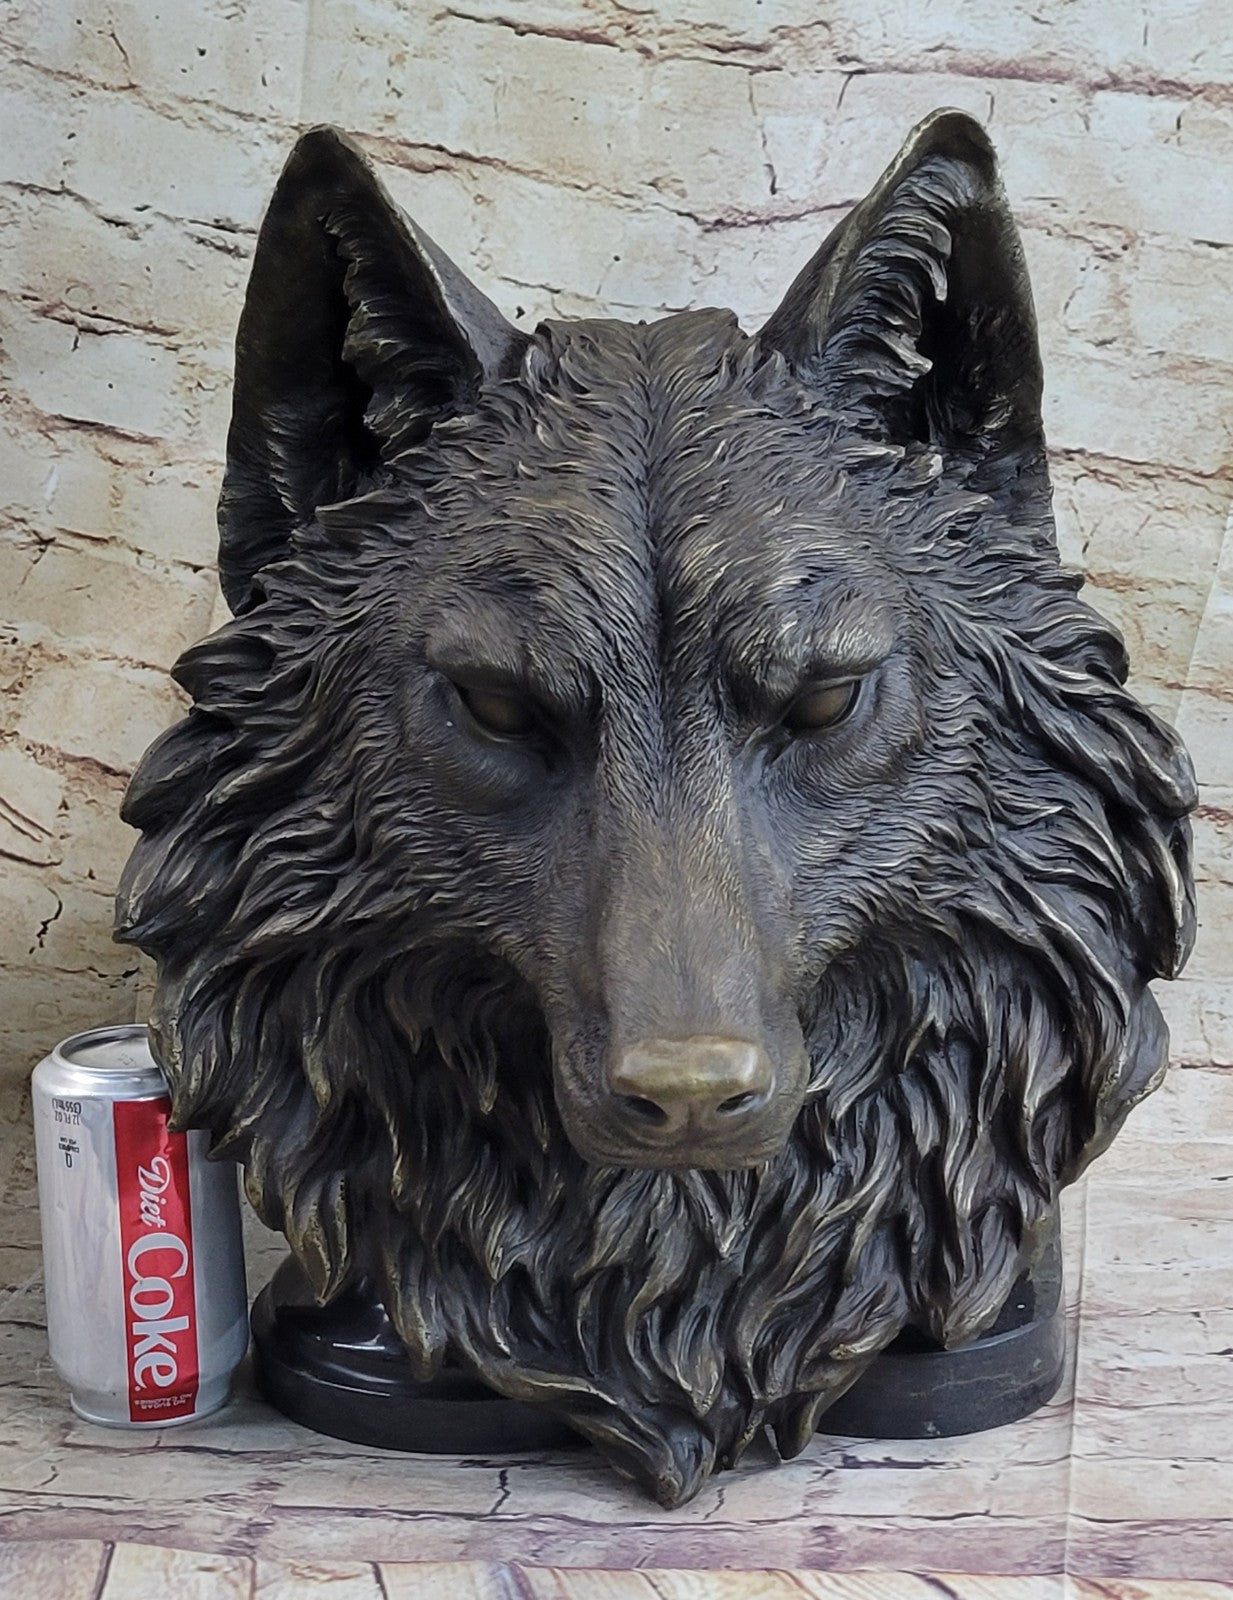 Handcrafted bronze sculpture SALE Signed Original Hot Cast Wolf Head Wall